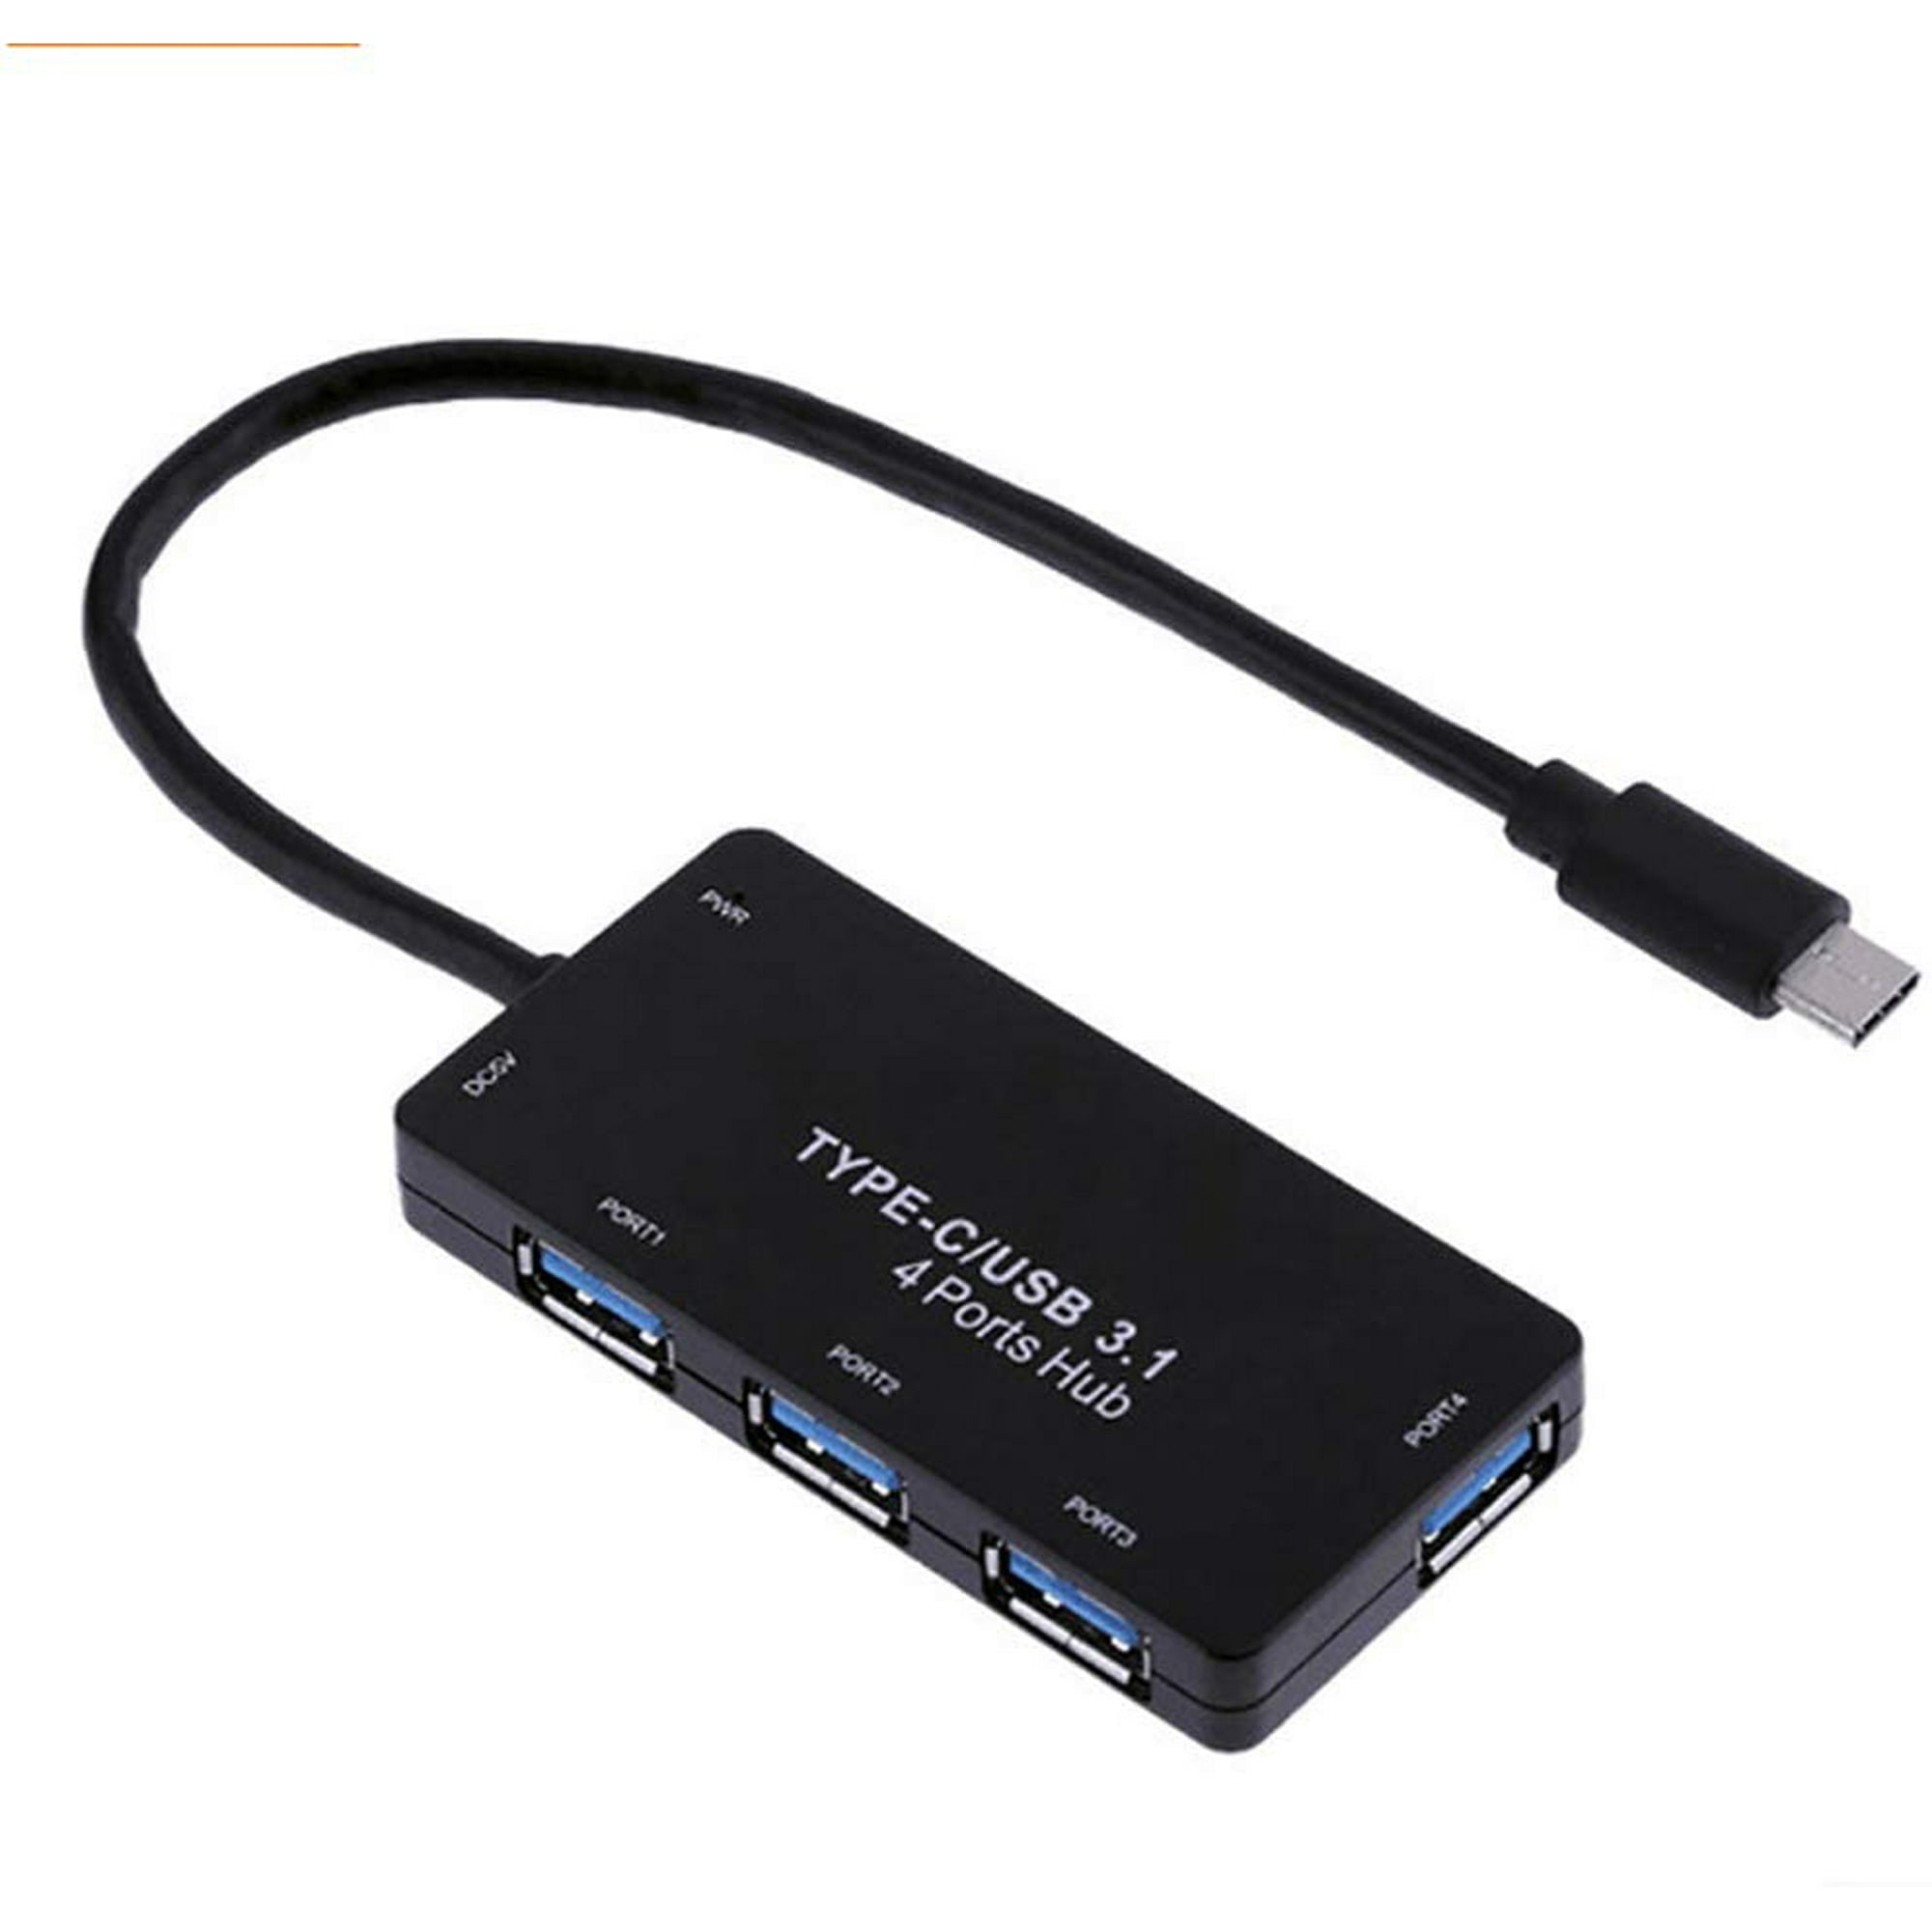 anekdote design Produktion KUNOVA (TM) Super High Speed Type C USB 3.1 4 Ports USB HUB Build-in USB  3.0 Cable Backward Compatible with USB 2.0 | Walmart Canada